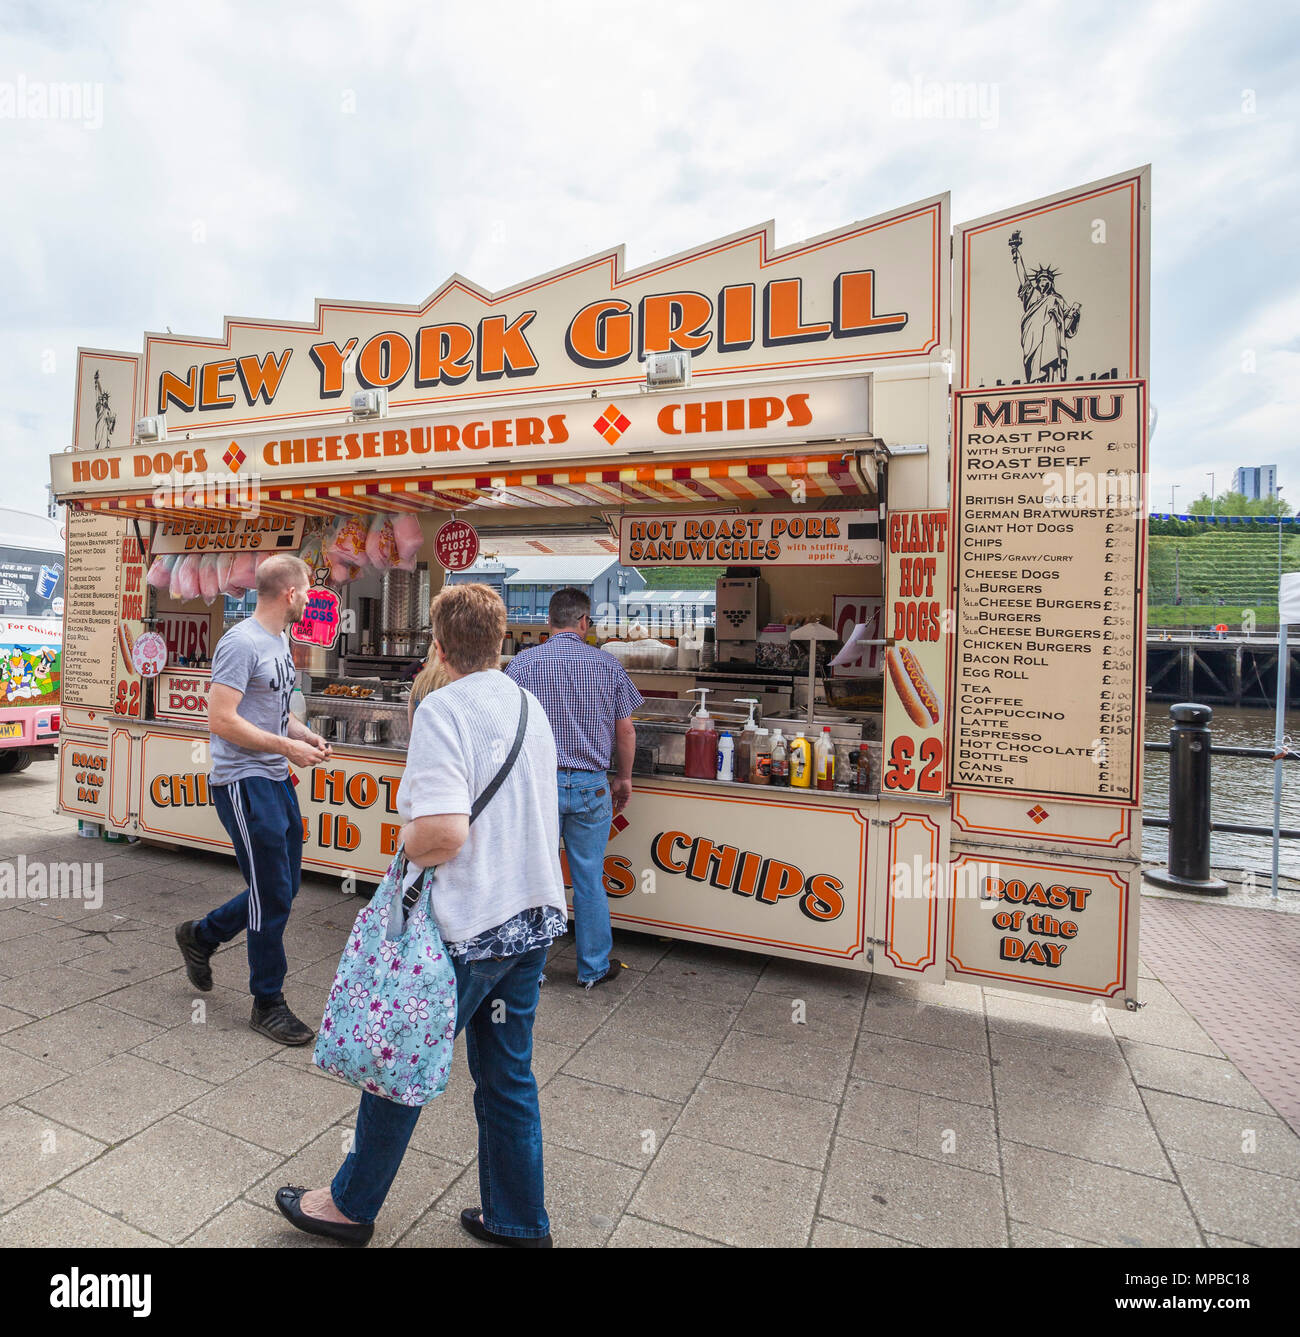 New York Grill am Markt am Kai, Newcastle upon Tyne, England, UK Abschaltdruck Stockfoto